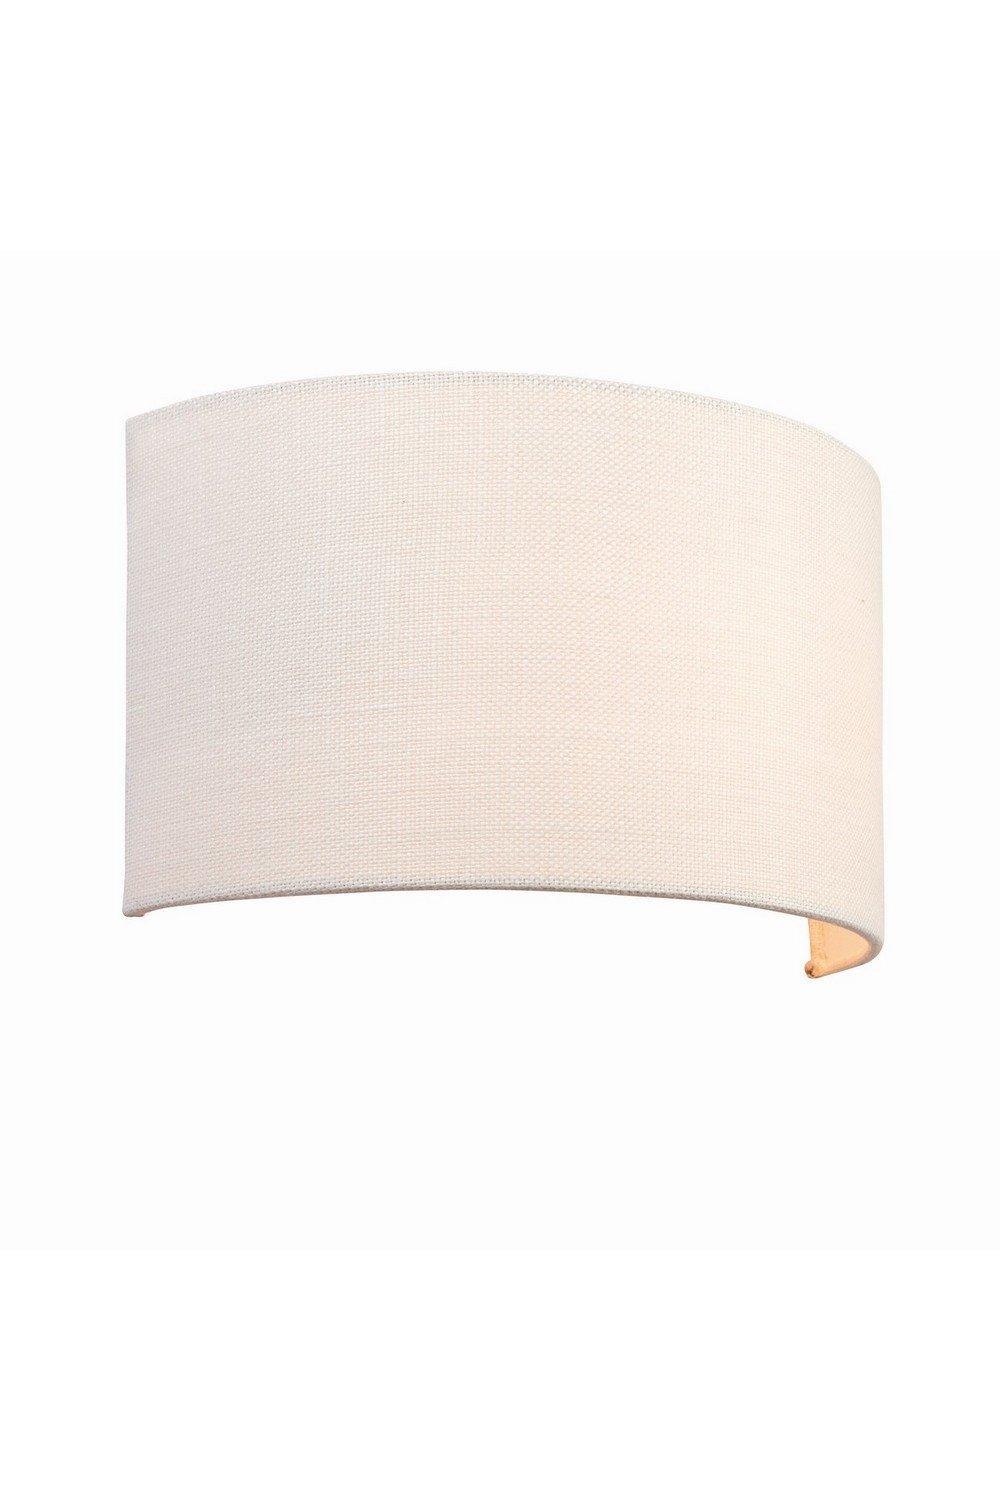 Obi 1 Light Up & Down Wall Light Vintage White Linen Polyester Cotton E27